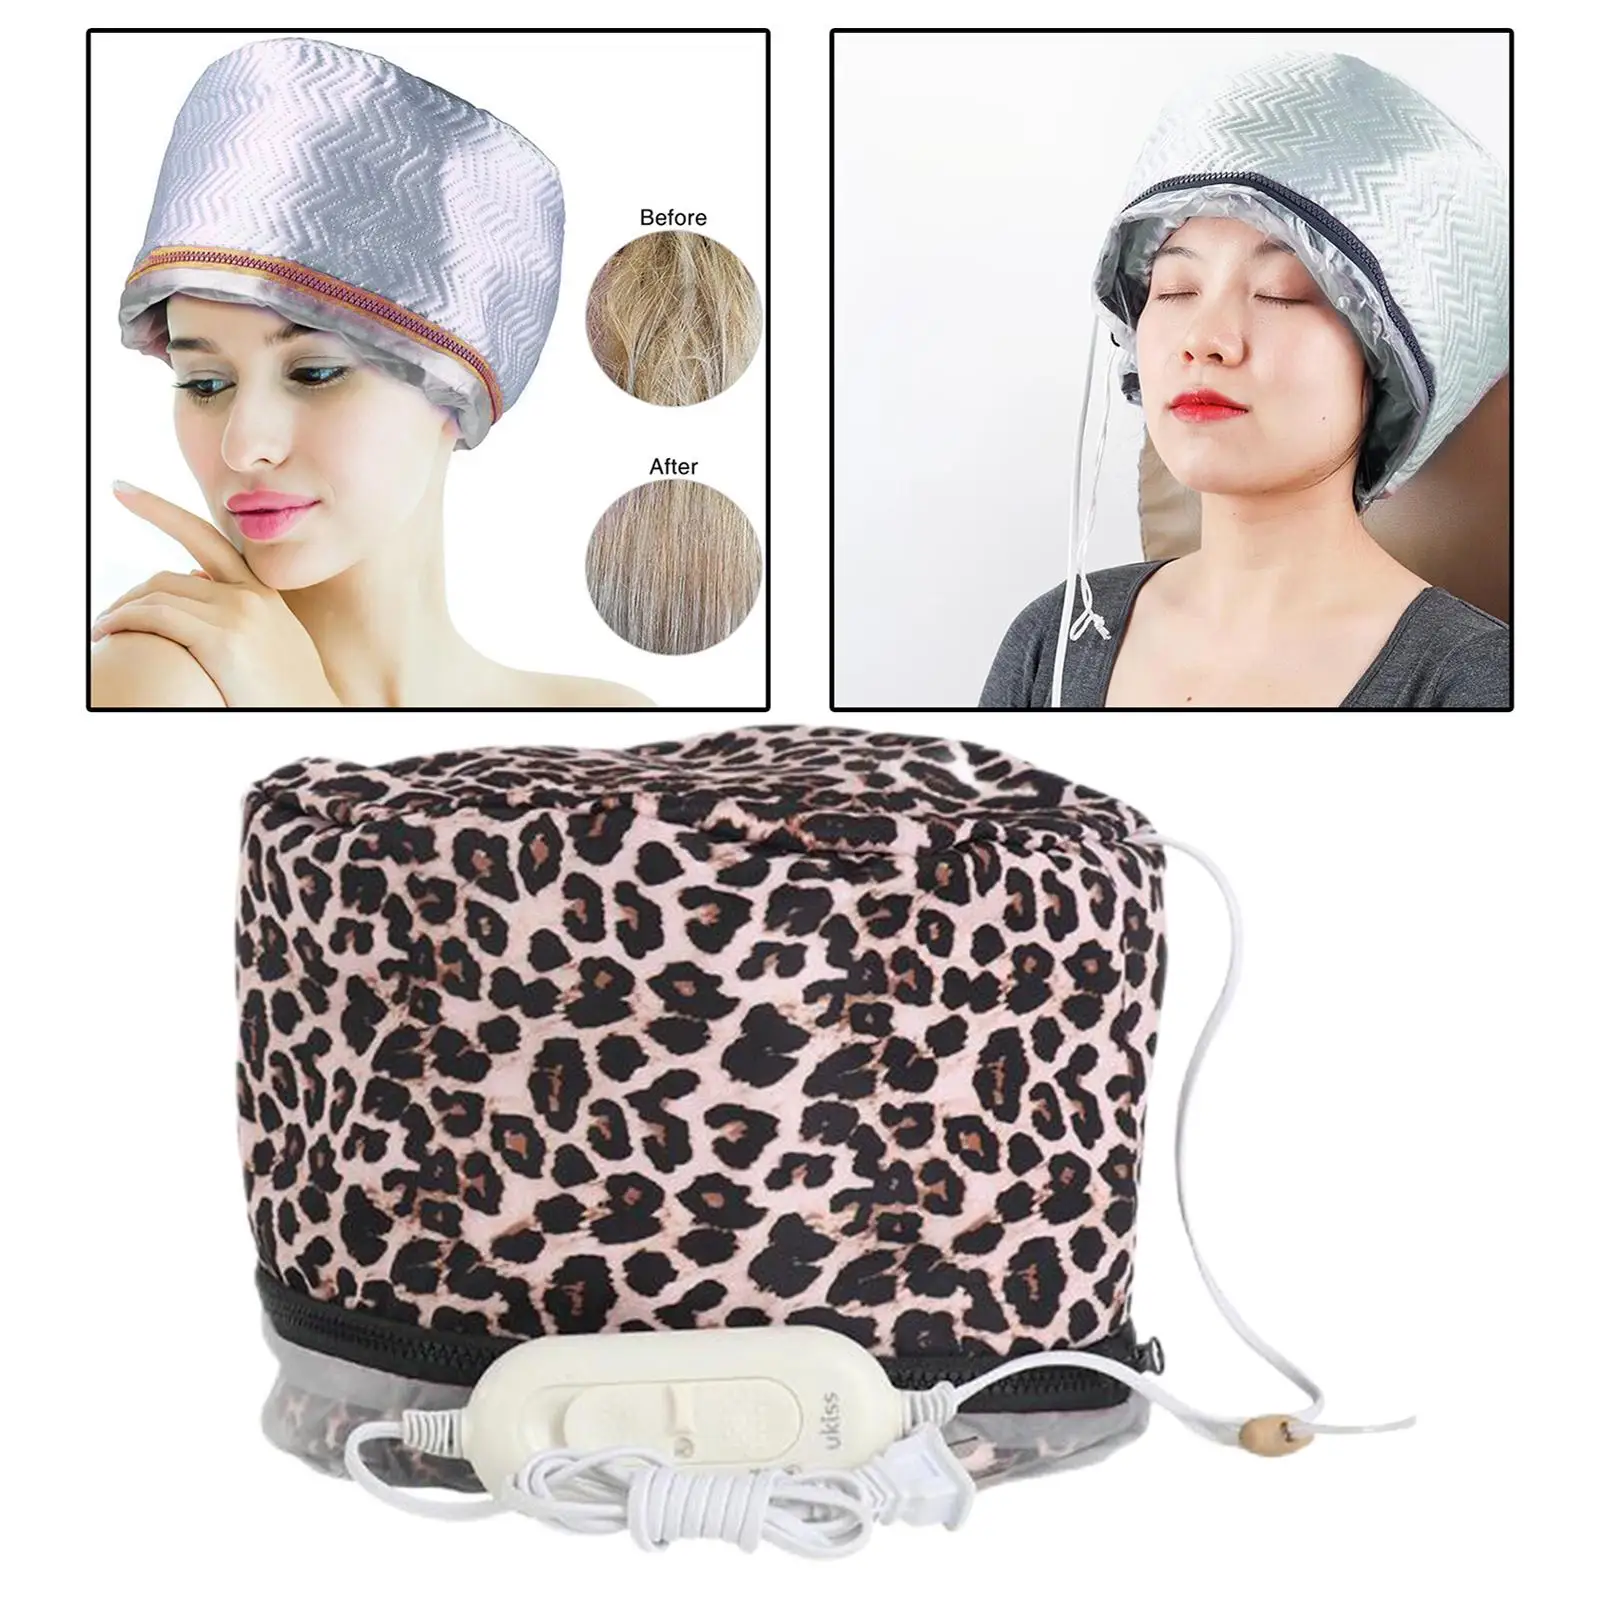 Hair Steamer Heating Hat 110V Hair SPA Waterproof Thermal Caps Personal Care Adjustable Temperature Control Leopard Print US